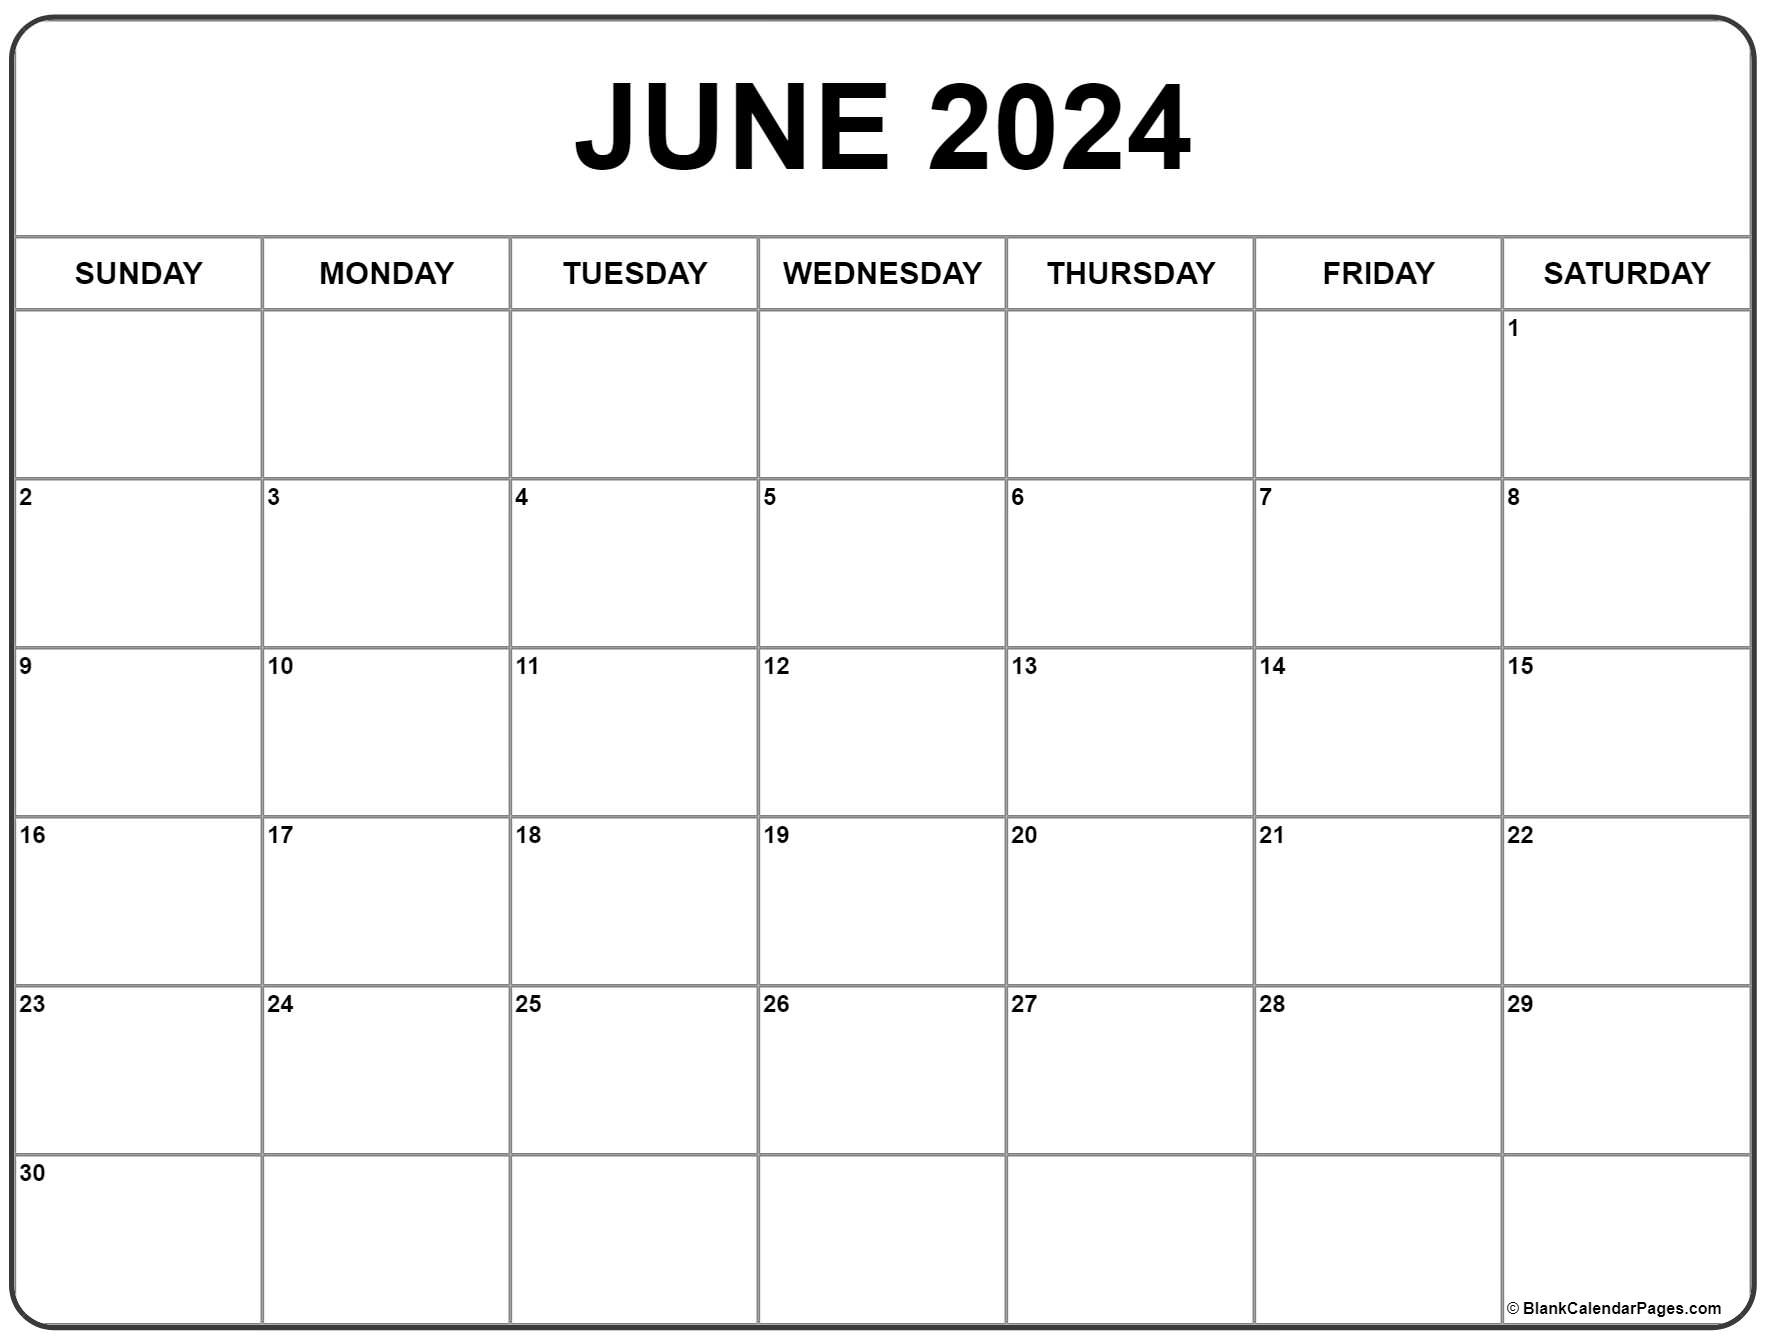 June 2024 Calendar | Free Printable Calendar throughout Monthly Calendar July 2023-June 2024